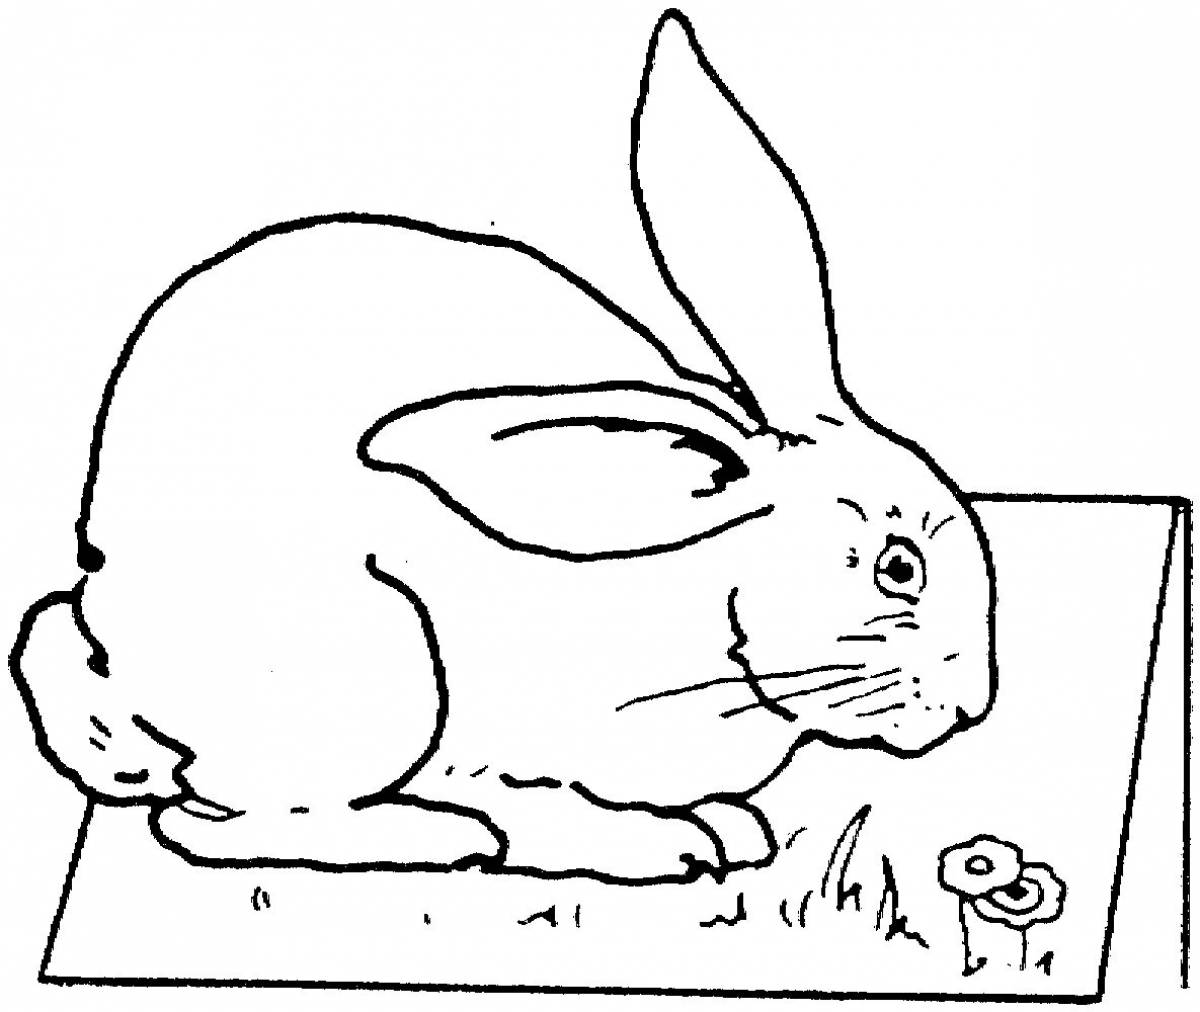 Magic rabbit coloring book for kids